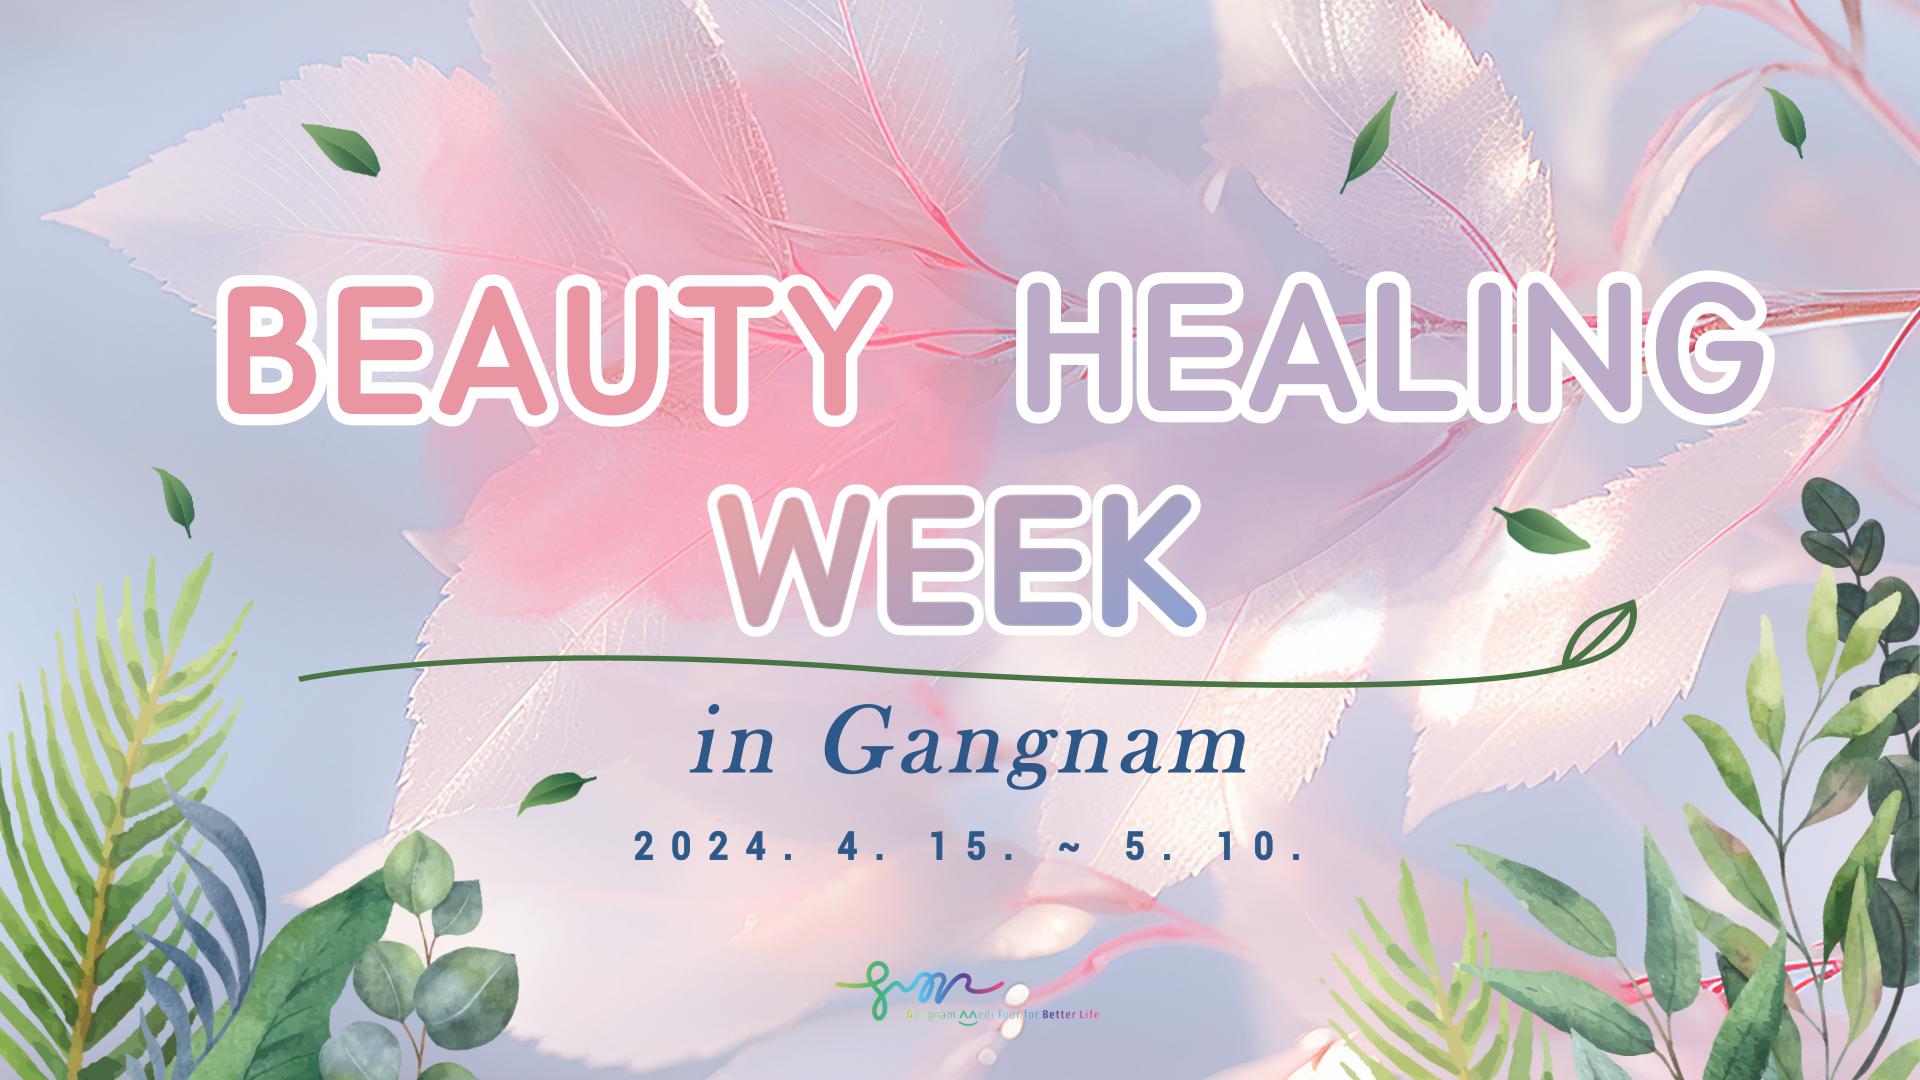 Beauty and Healing Weeks in Gangnam
